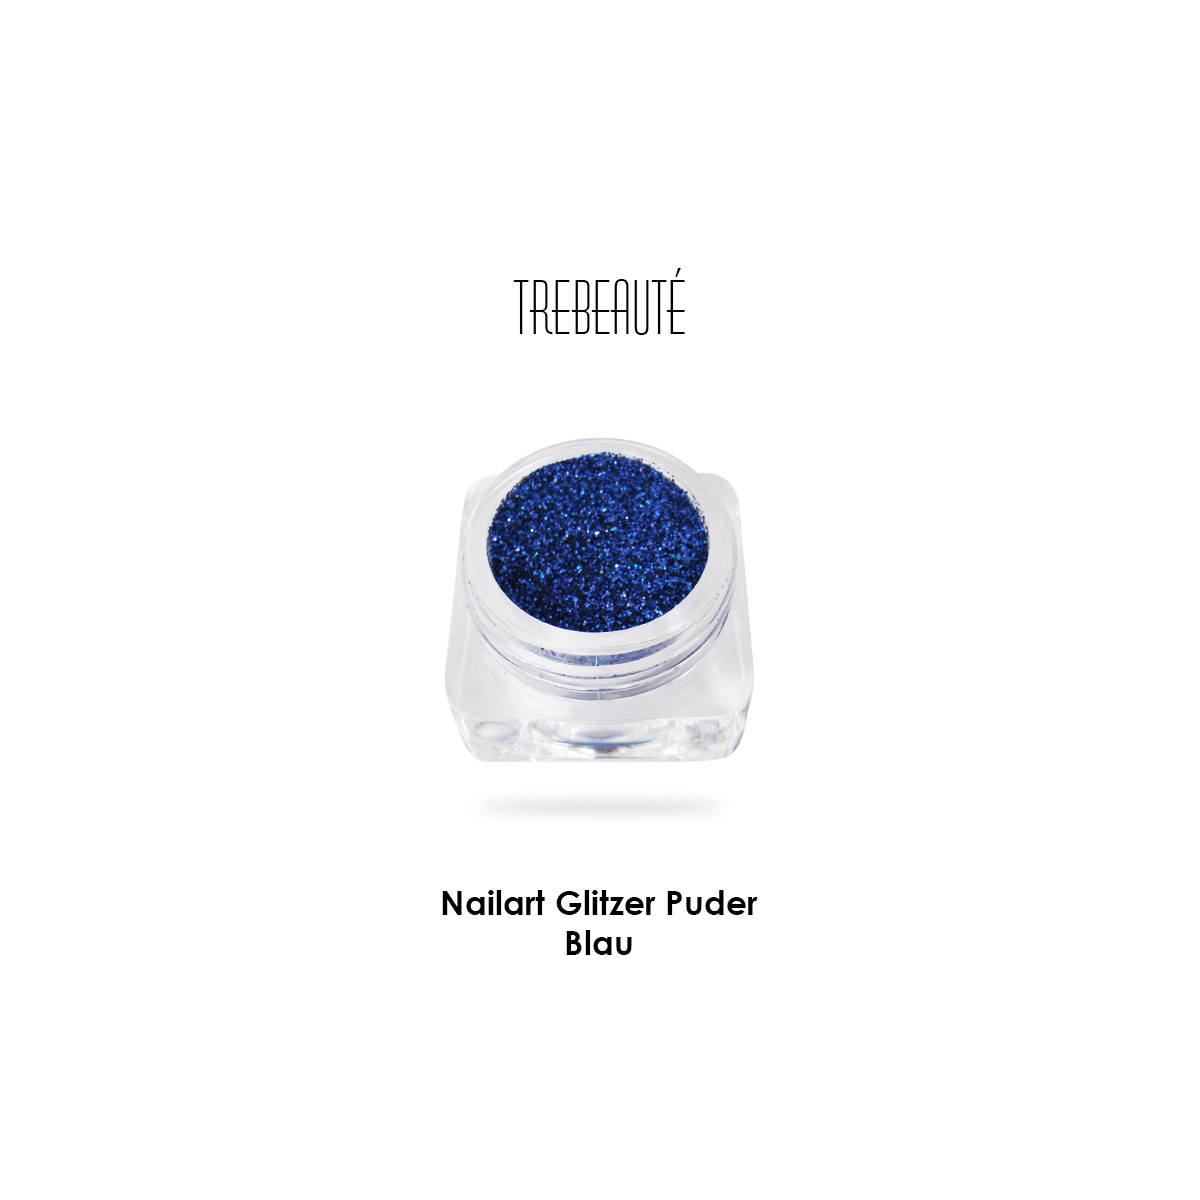 Nailart Glitzer Puder & Glitterstaub, Blau